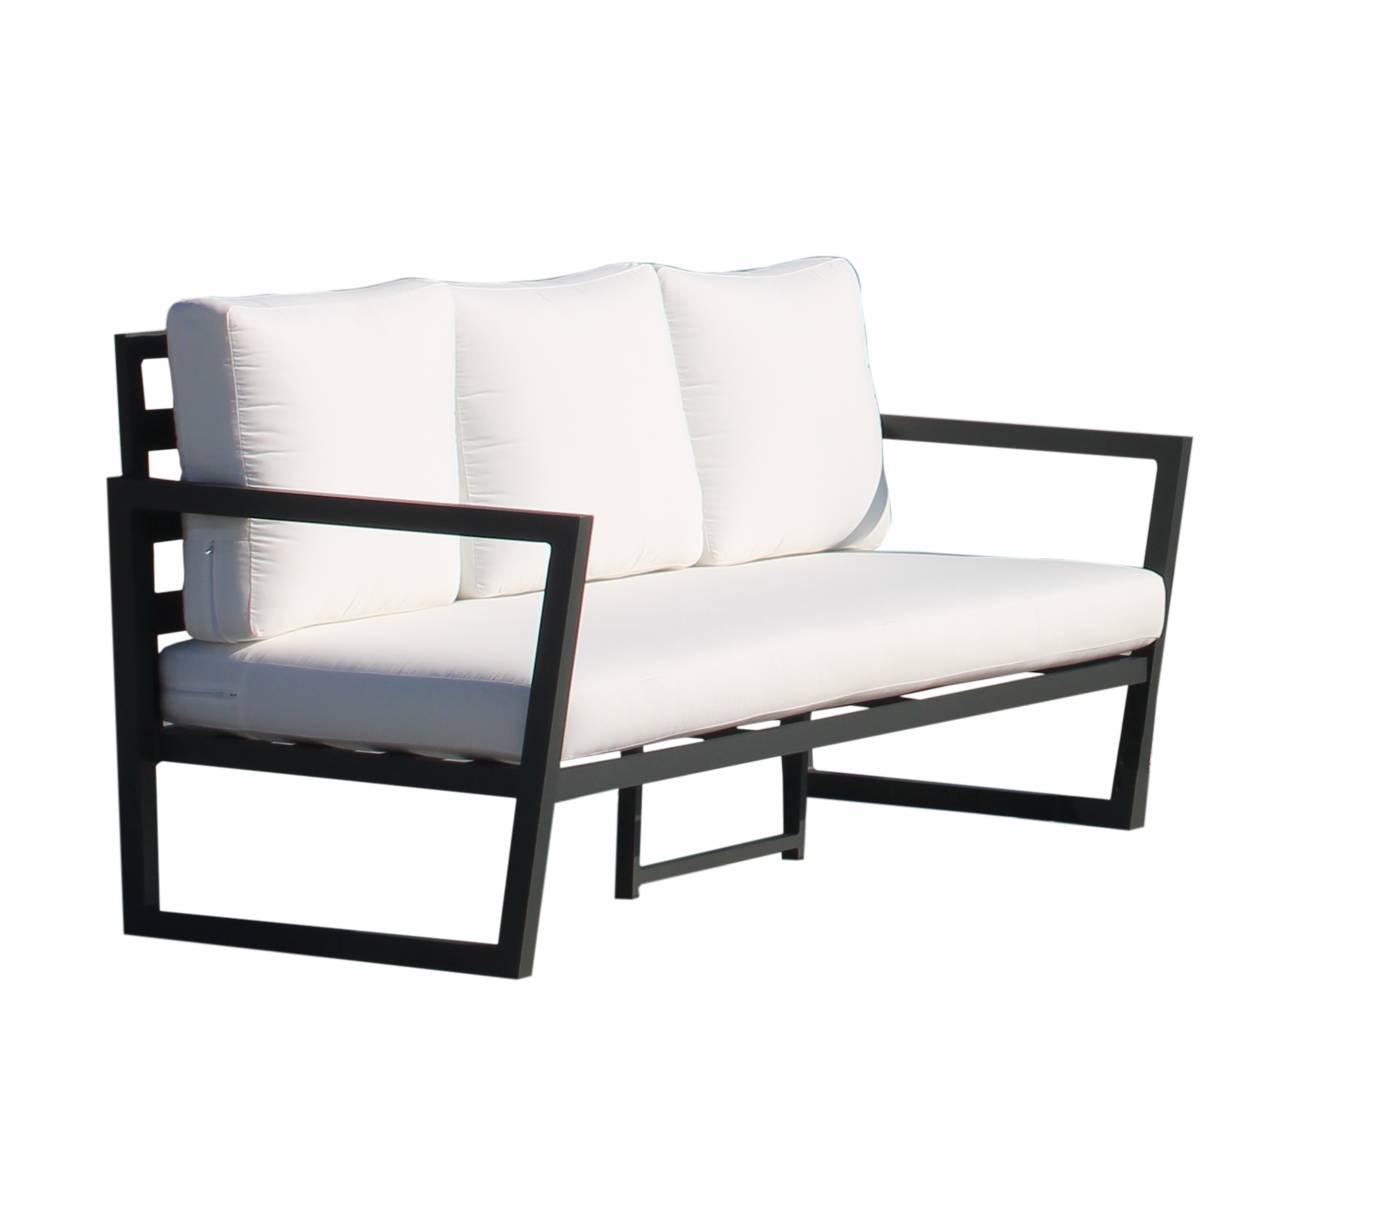 Set Aluminio Alpine-8 - Conjunto de aluminio para exterior: sofá 3 plazas + 2 sillones + mesa de centro. Disponible en color blanco o antracita.